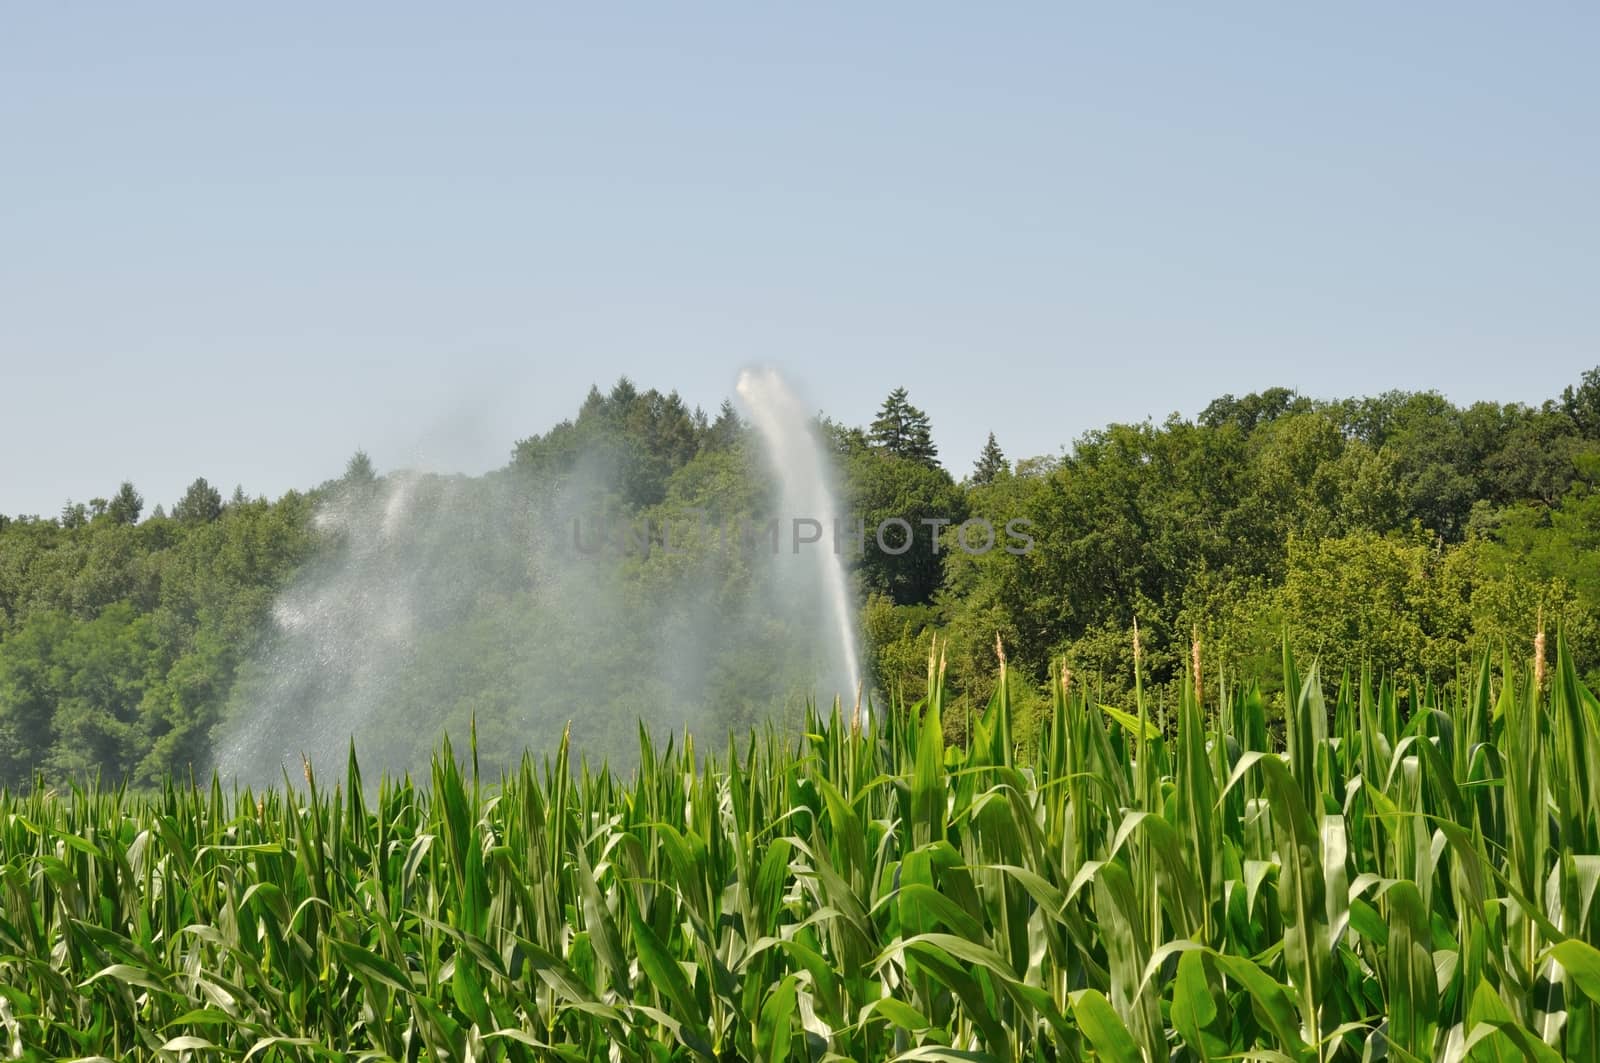 Water sprinkler installation in a field by BZH22